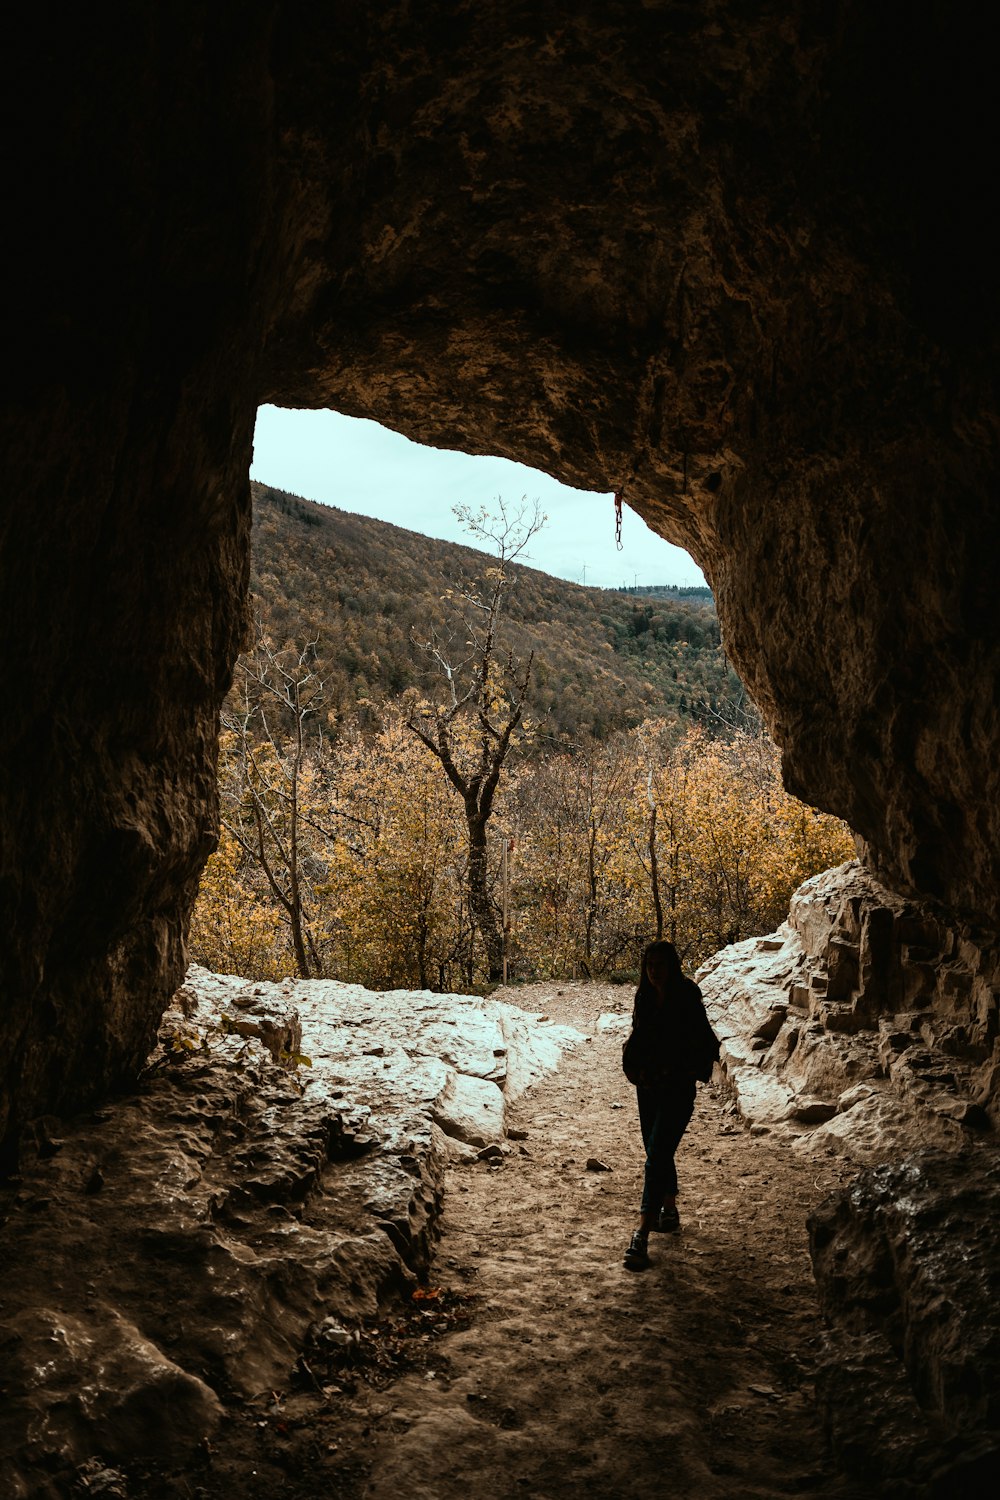 a person walking through a cave